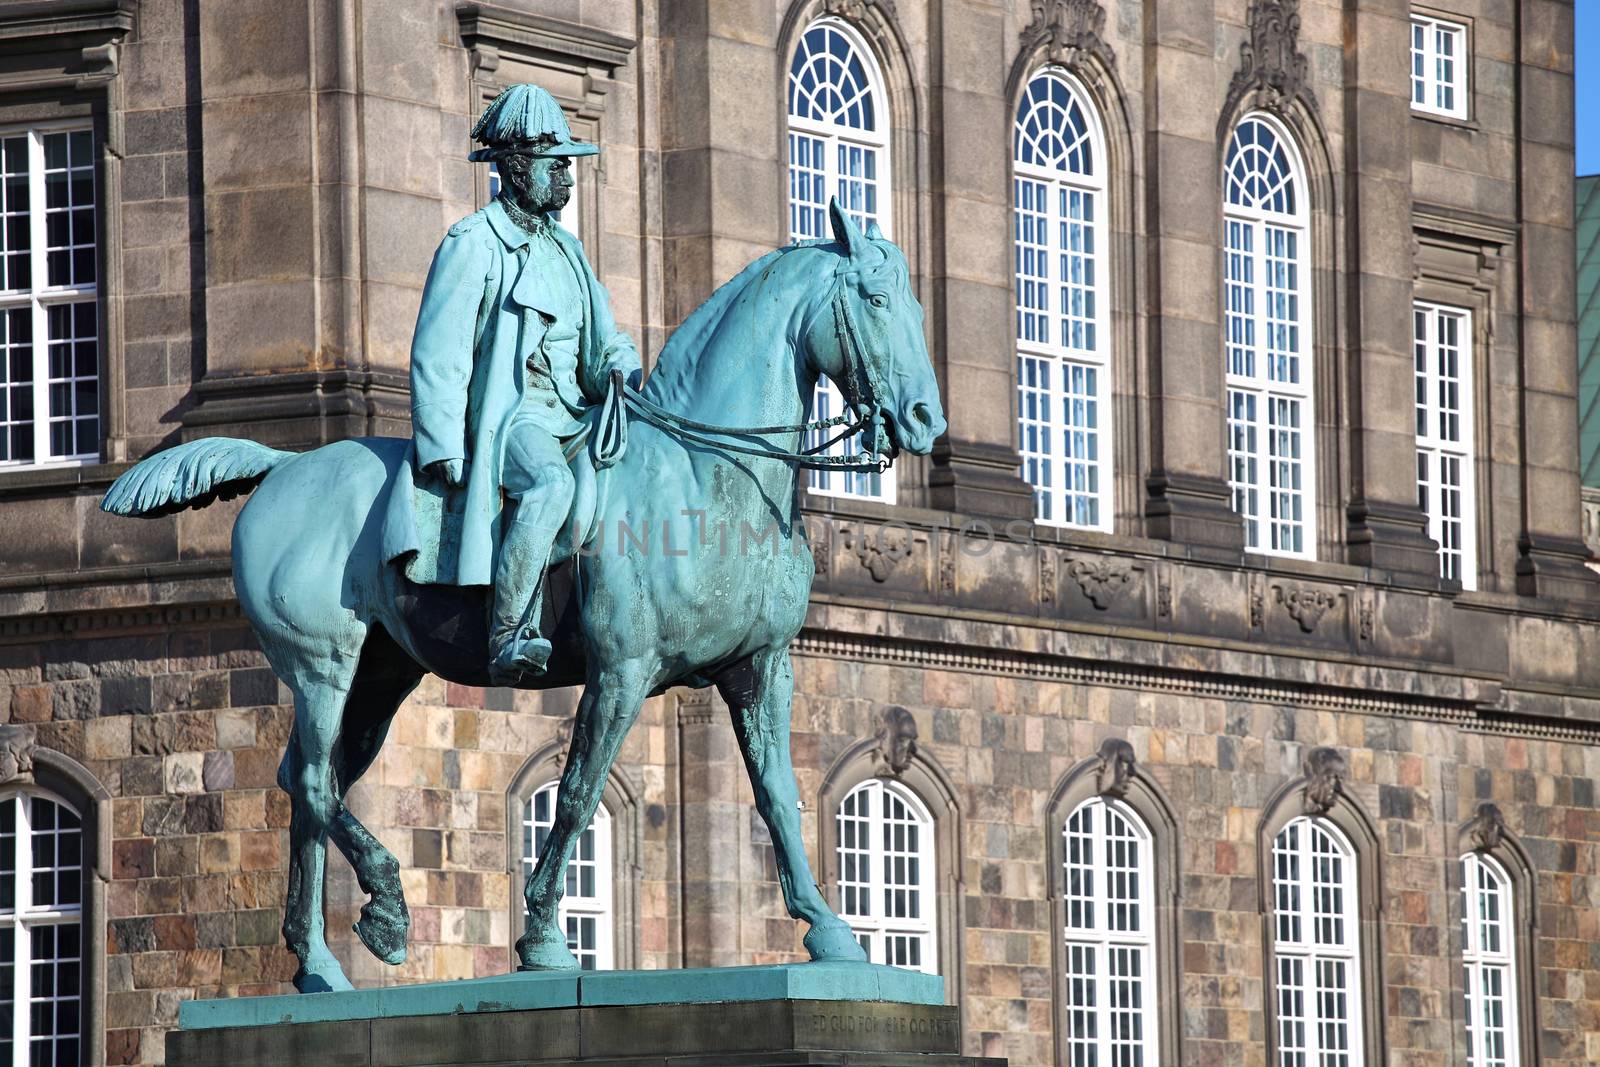 Equestrian statue of Christian IX near Christiansborg Palace, Copenhagen, Denmark